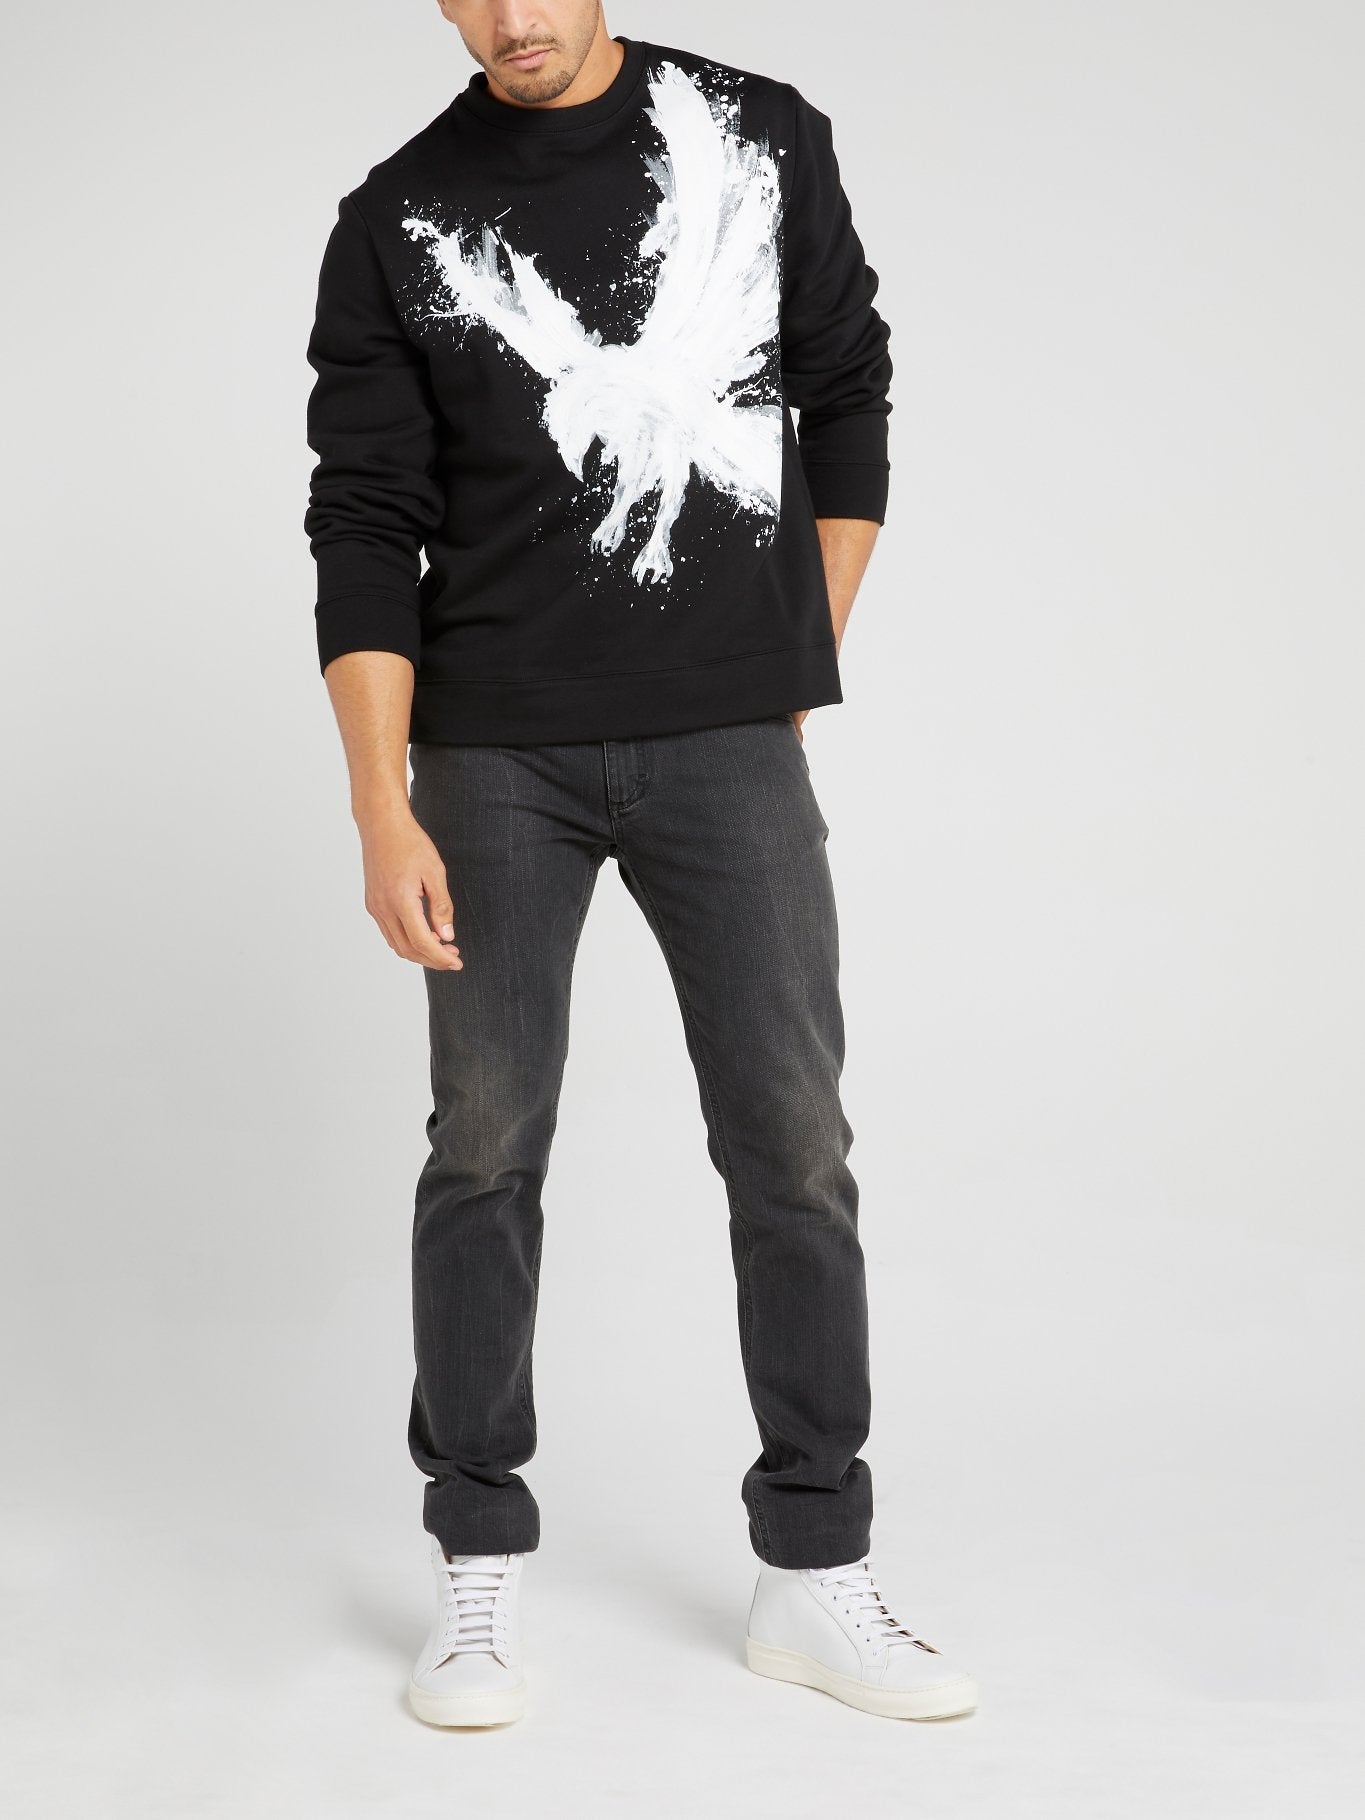 Black Eagle Print Cotton Sweatshirt